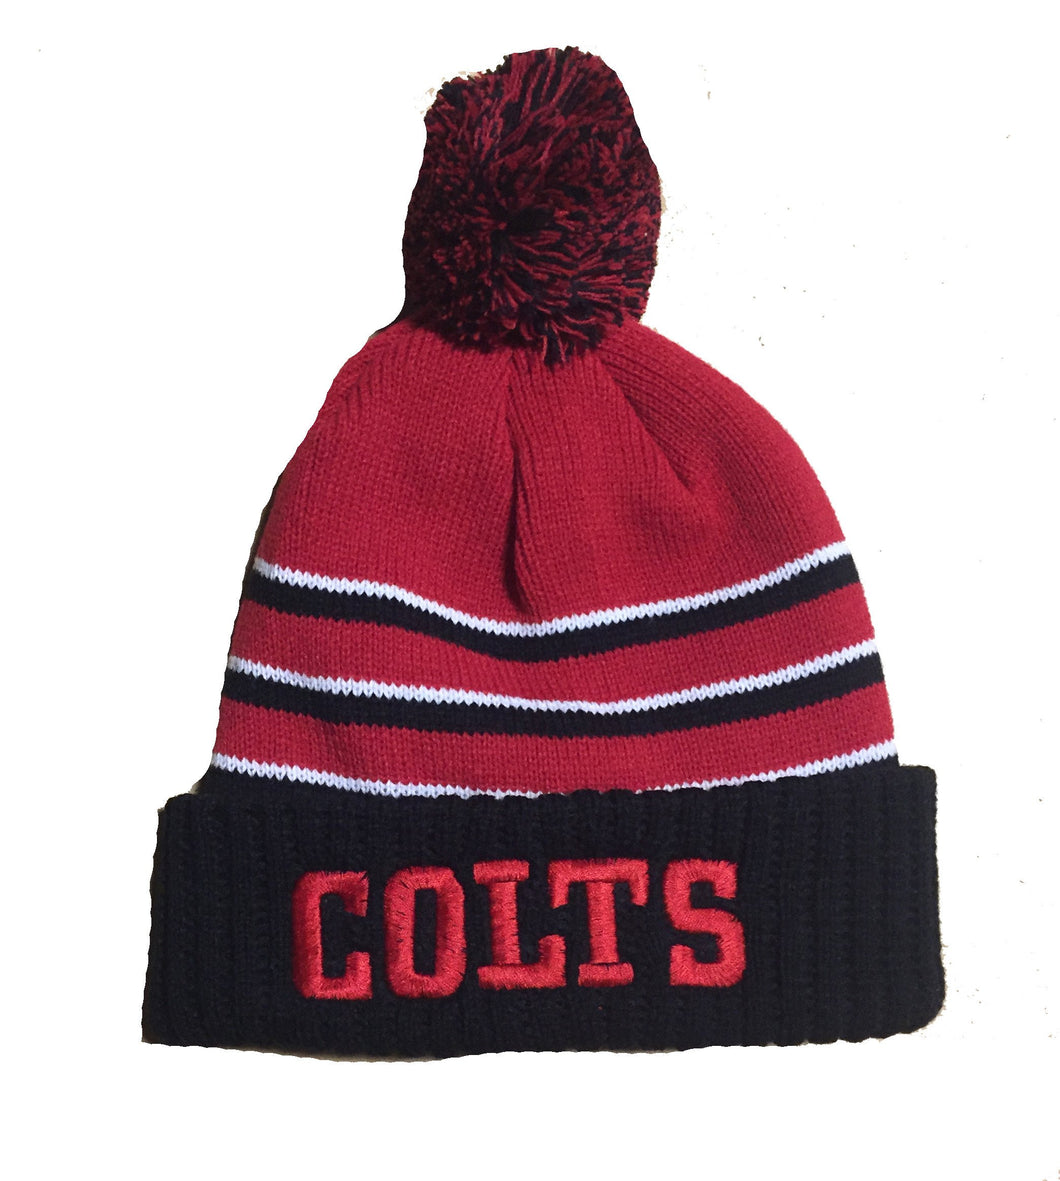 Colts Winter Knit Cap